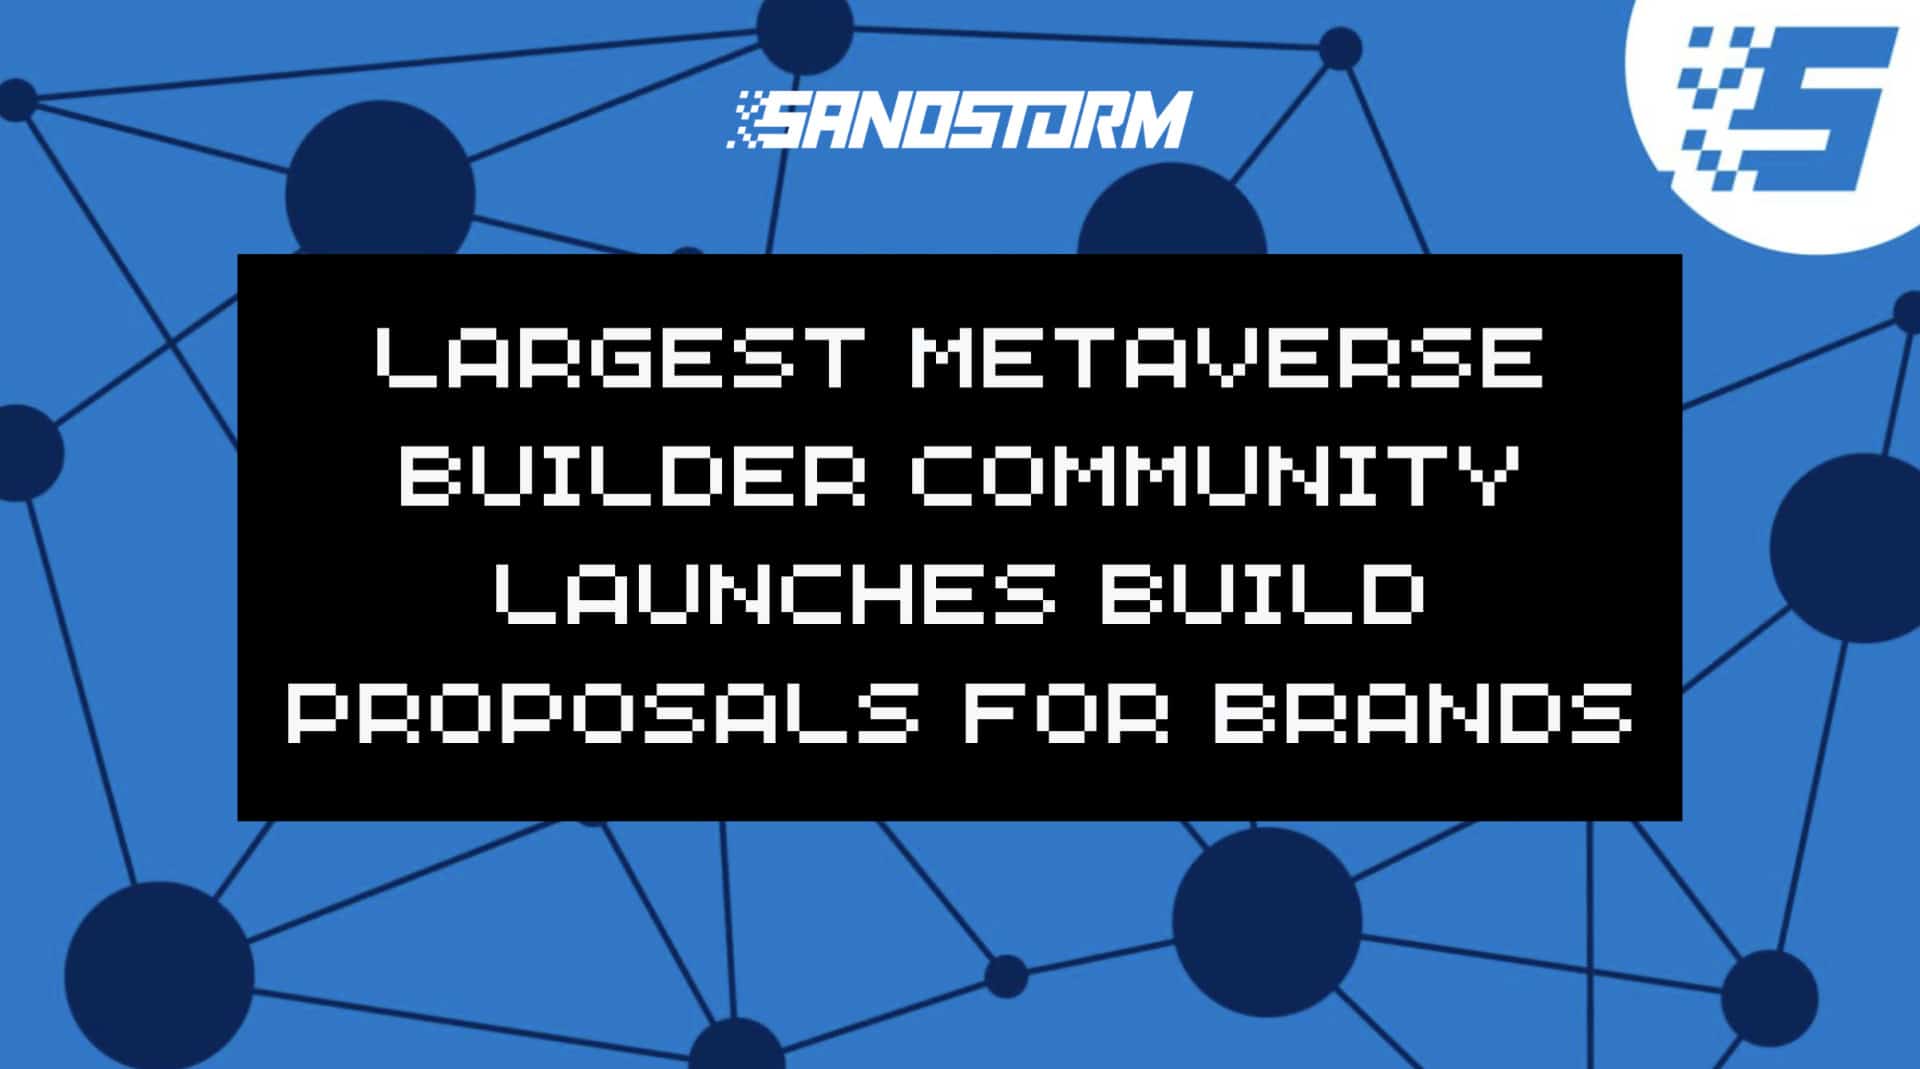 World’s-largest-metaverse-builder-community-sandstorm-launches-build-proposals-for-brands